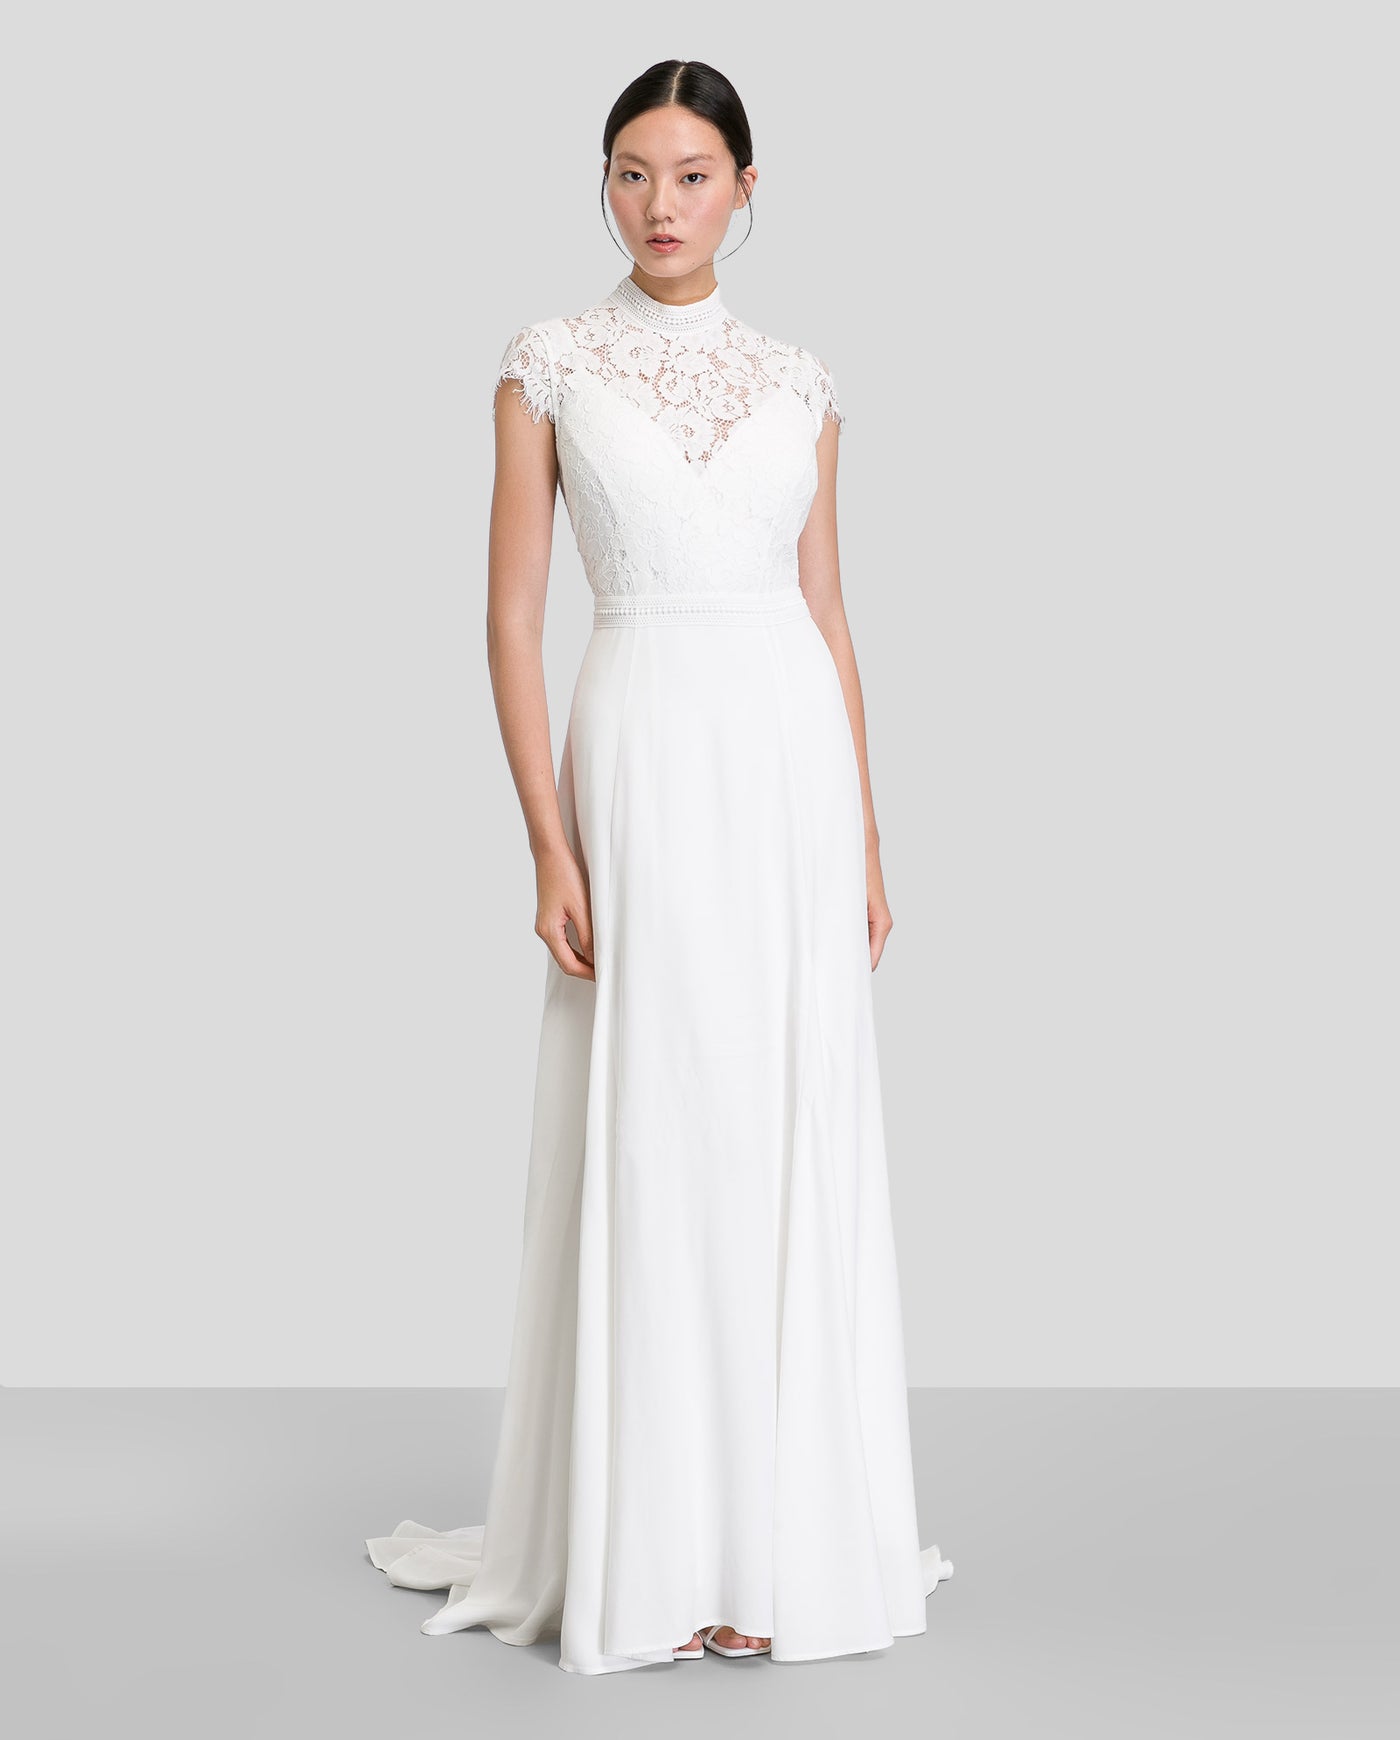 IVY OAK - MARTINE Bridal Dress - IO1123S7532-WH010 - White